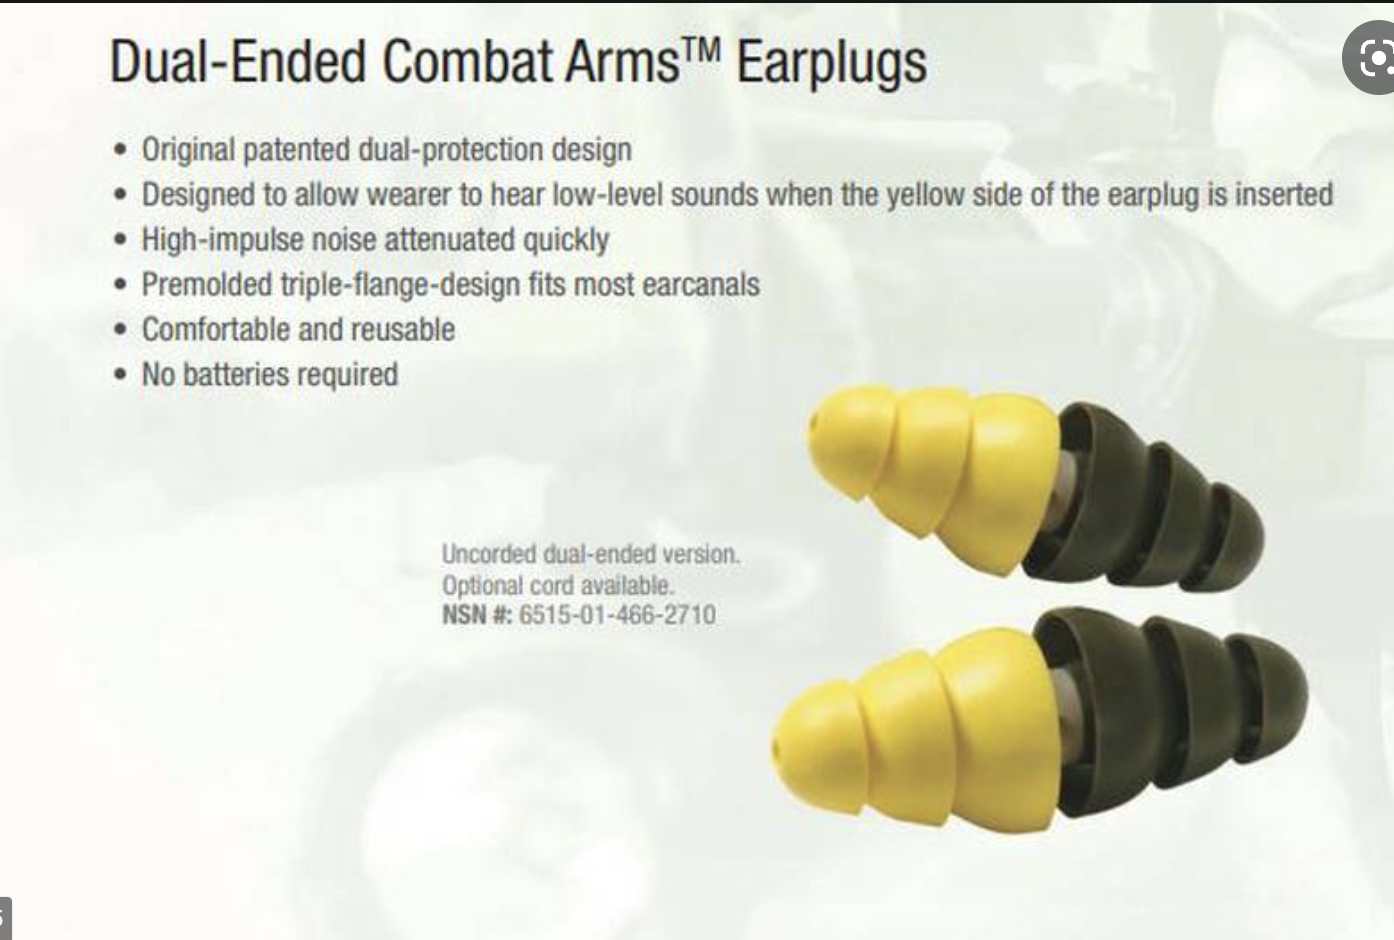 3M military earplugs